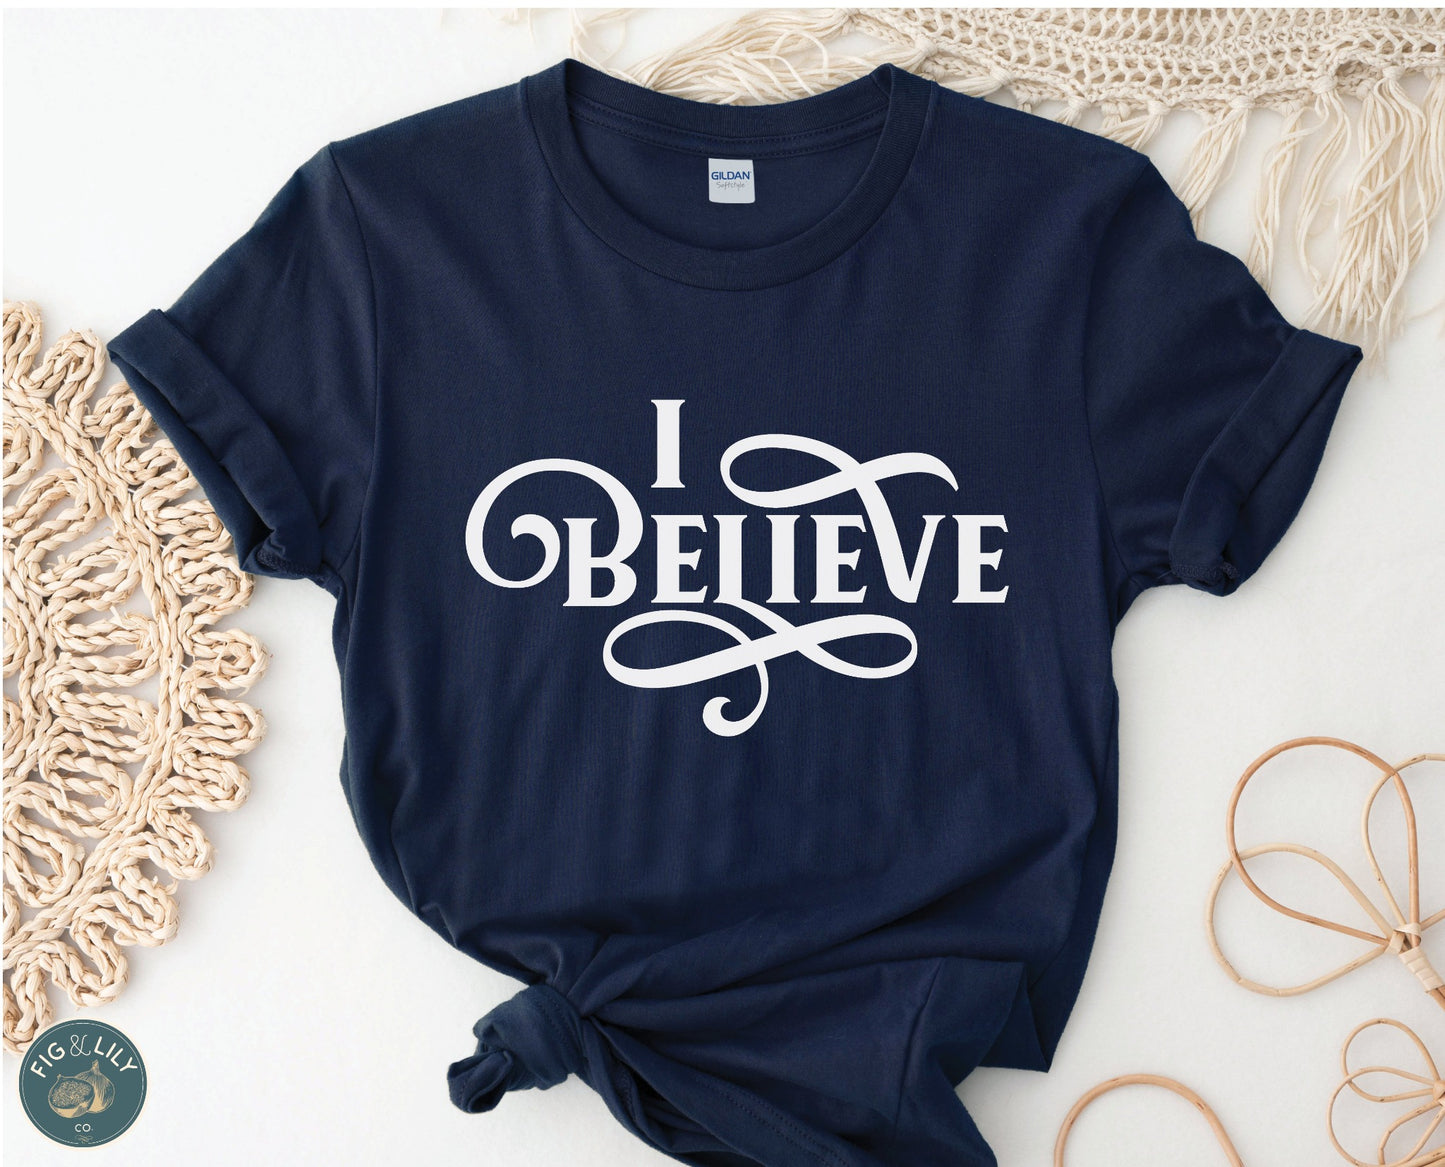 I BELIEVE - Swirl Women's Christian Unisex T-Shirt